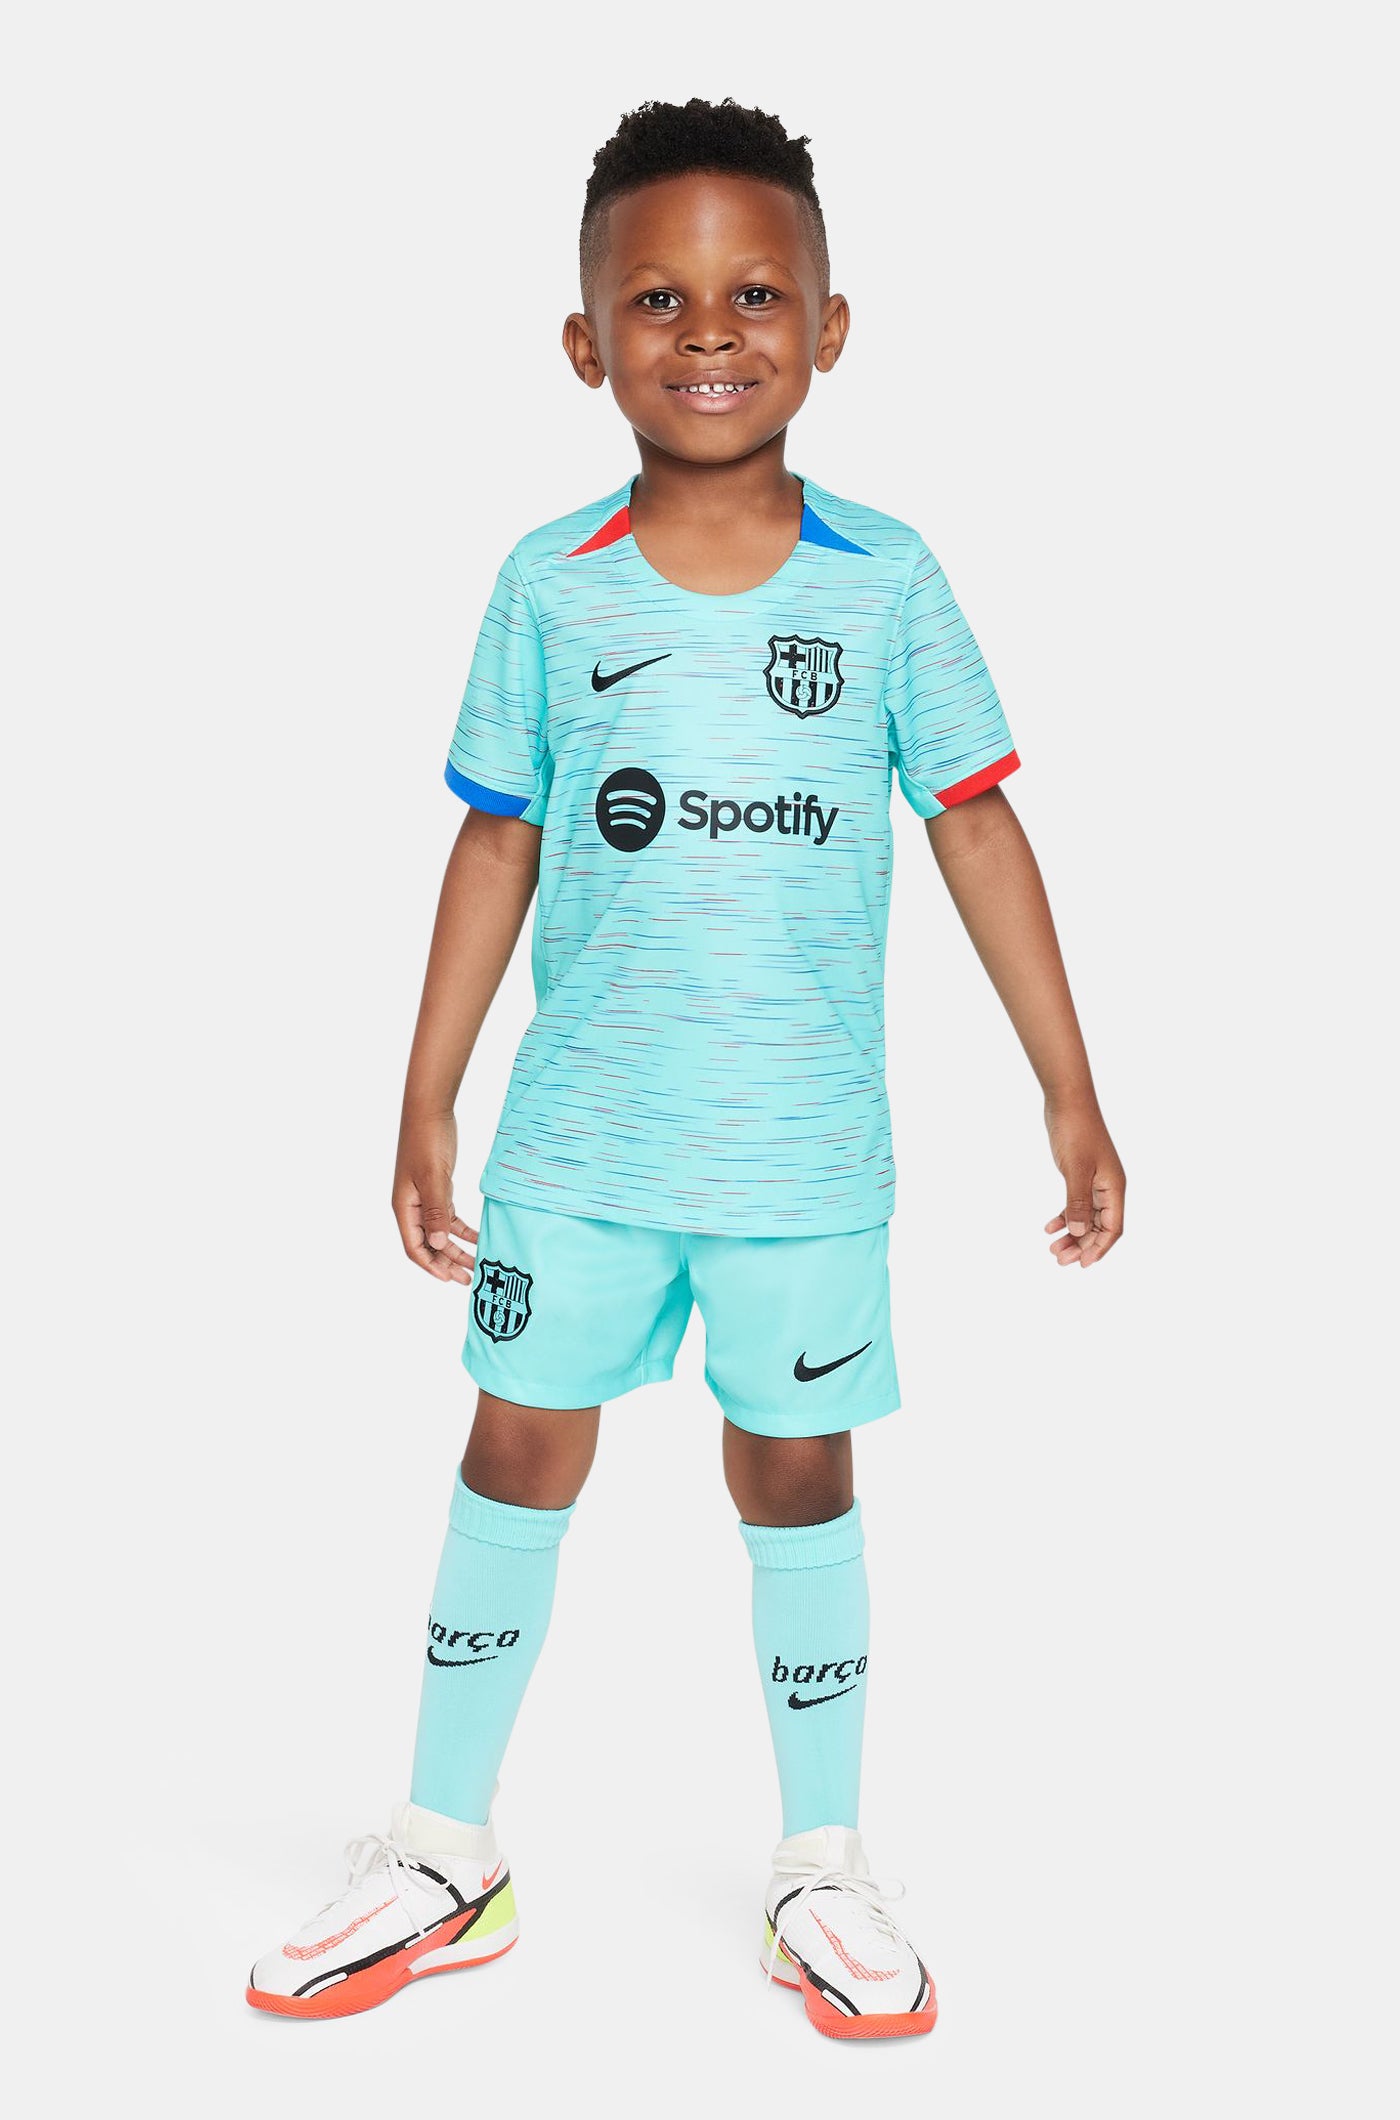 FC Barcelona third Kit 23/24 – Younger Kids  - MARTA